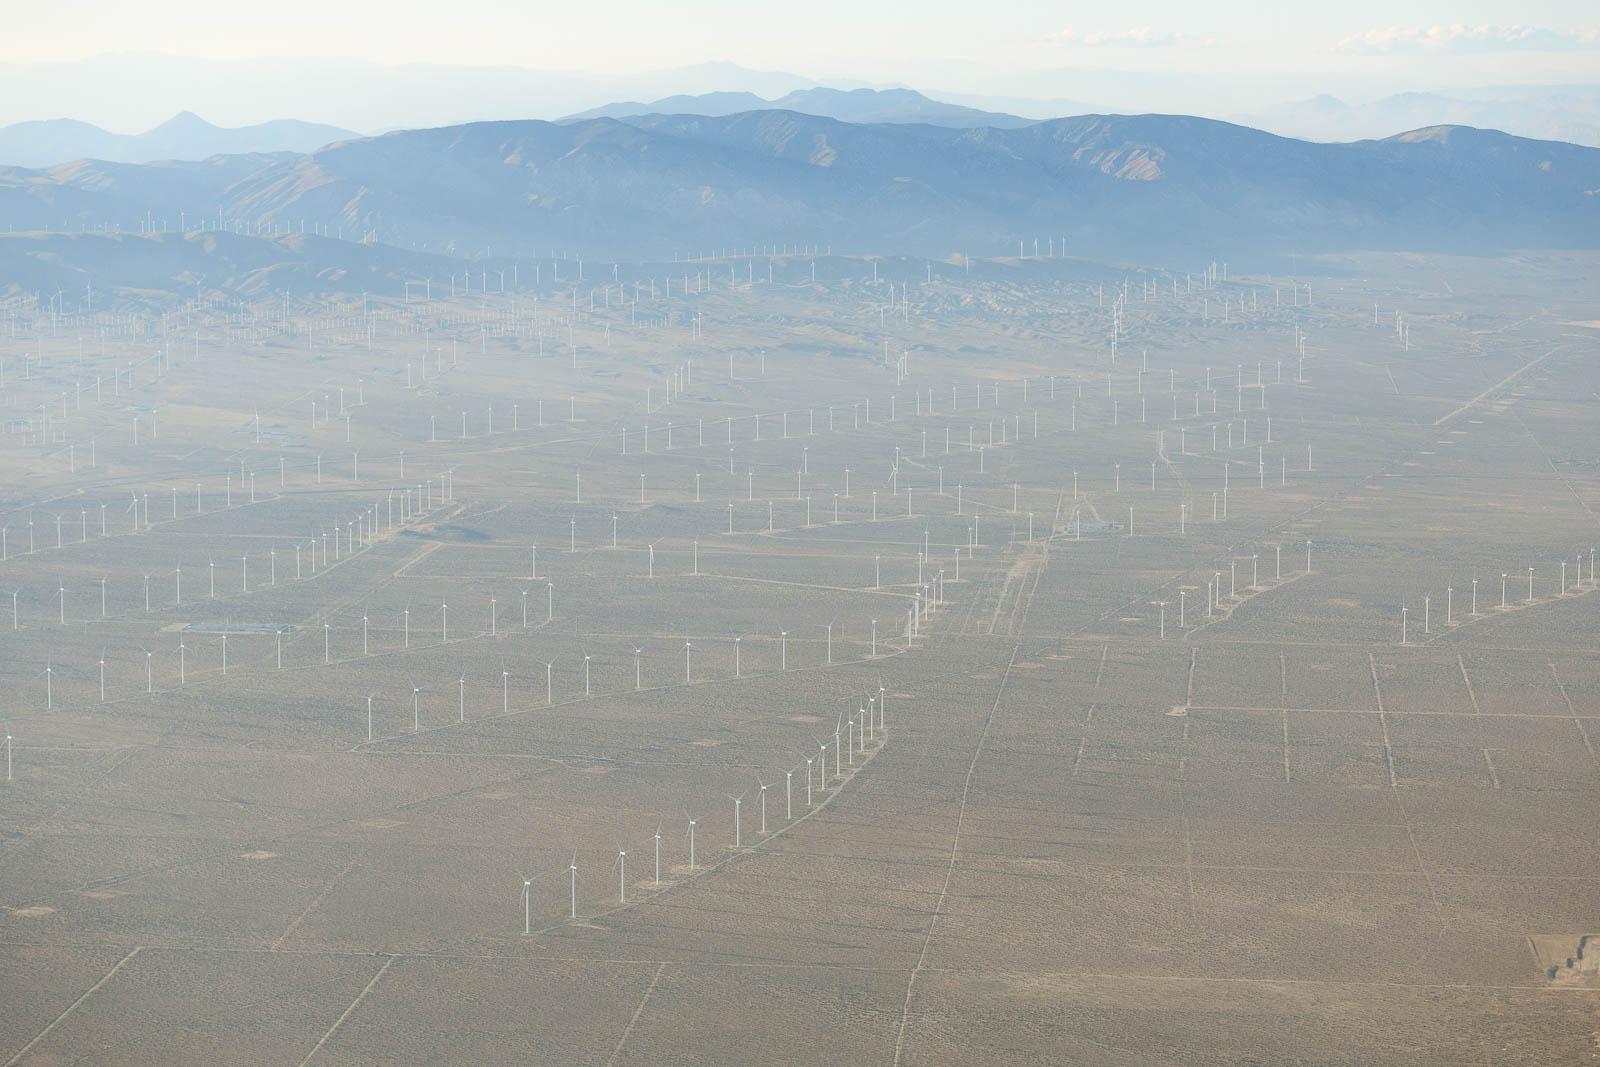 Solar farms of Mojave, CA